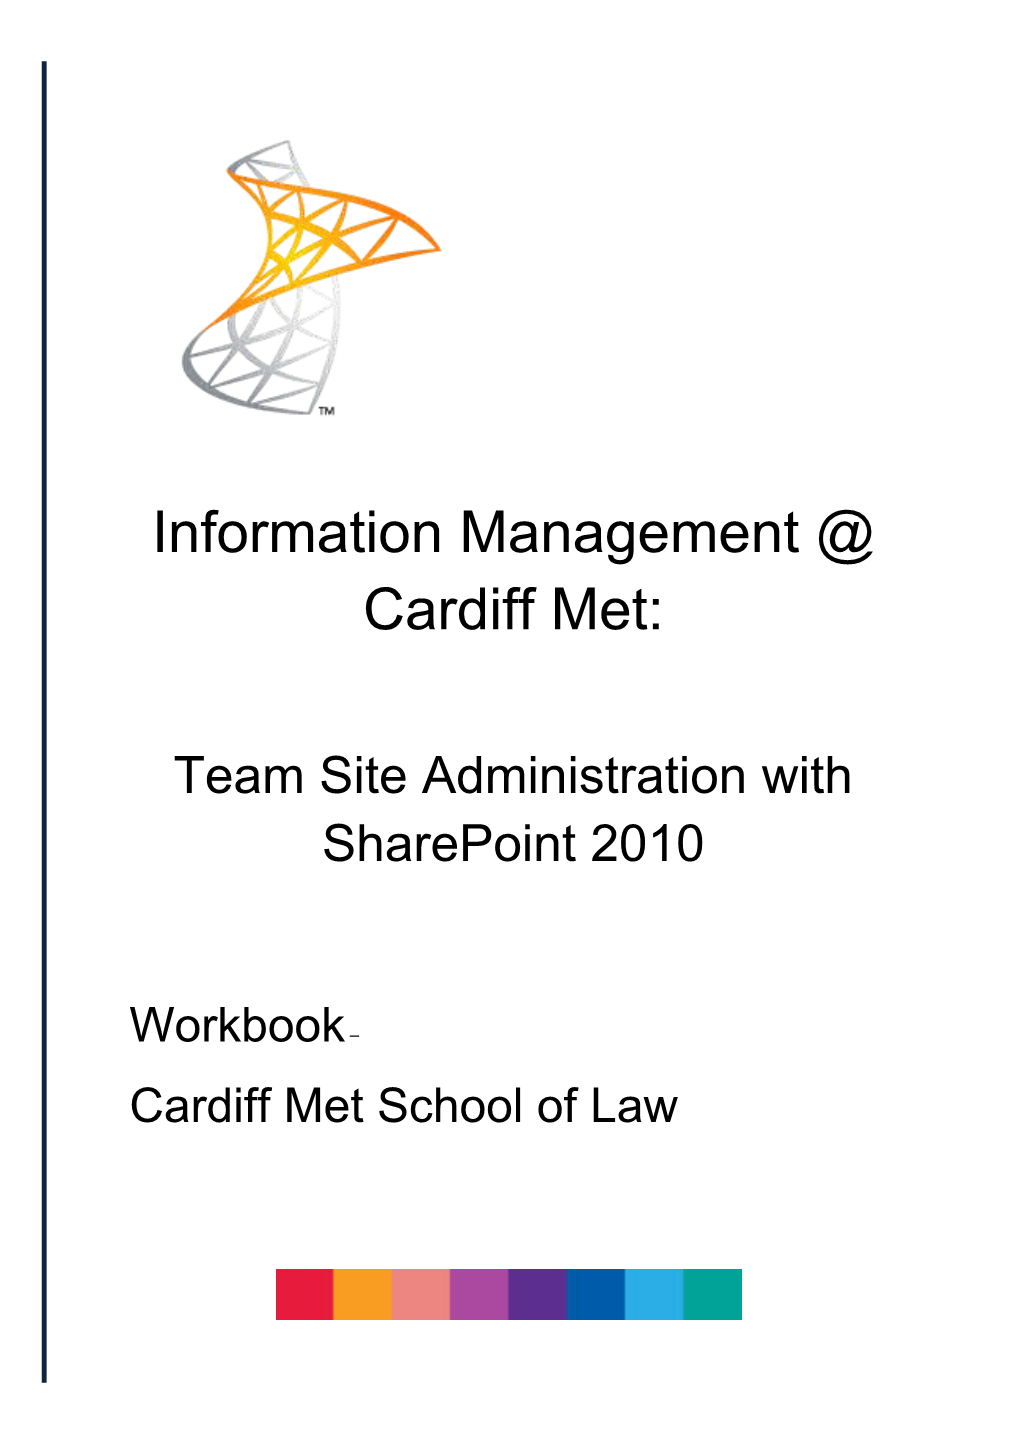 Cardiff Met School of Law Workbook